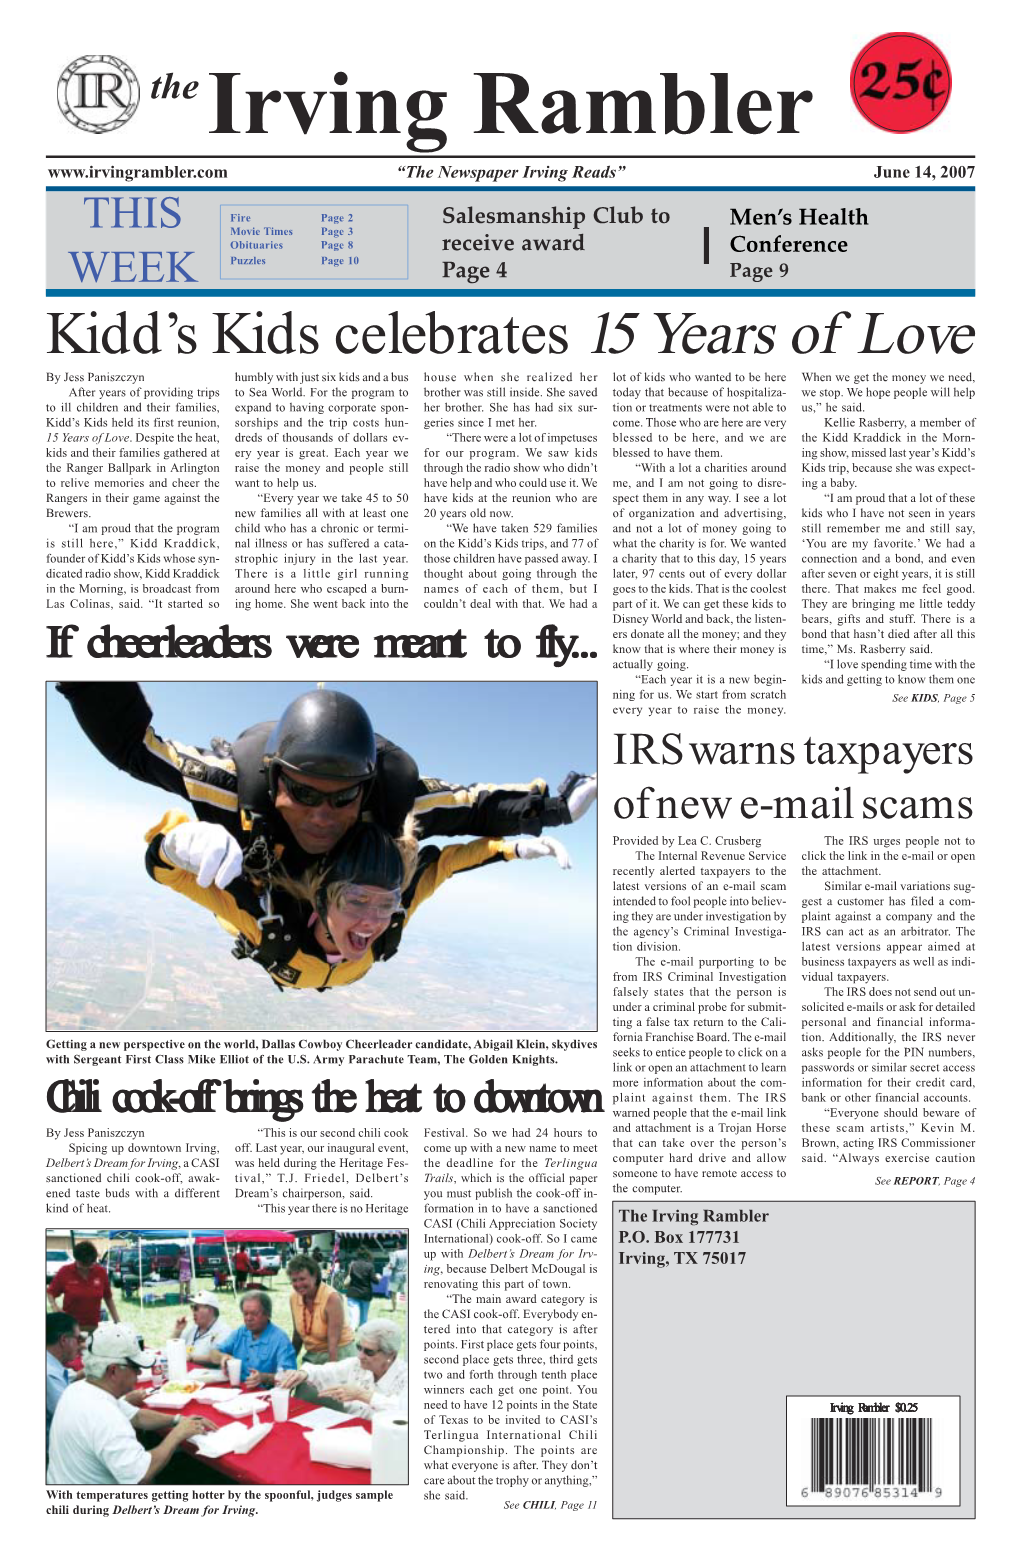 Kidd's Kids Celebrates 15 Years of Love